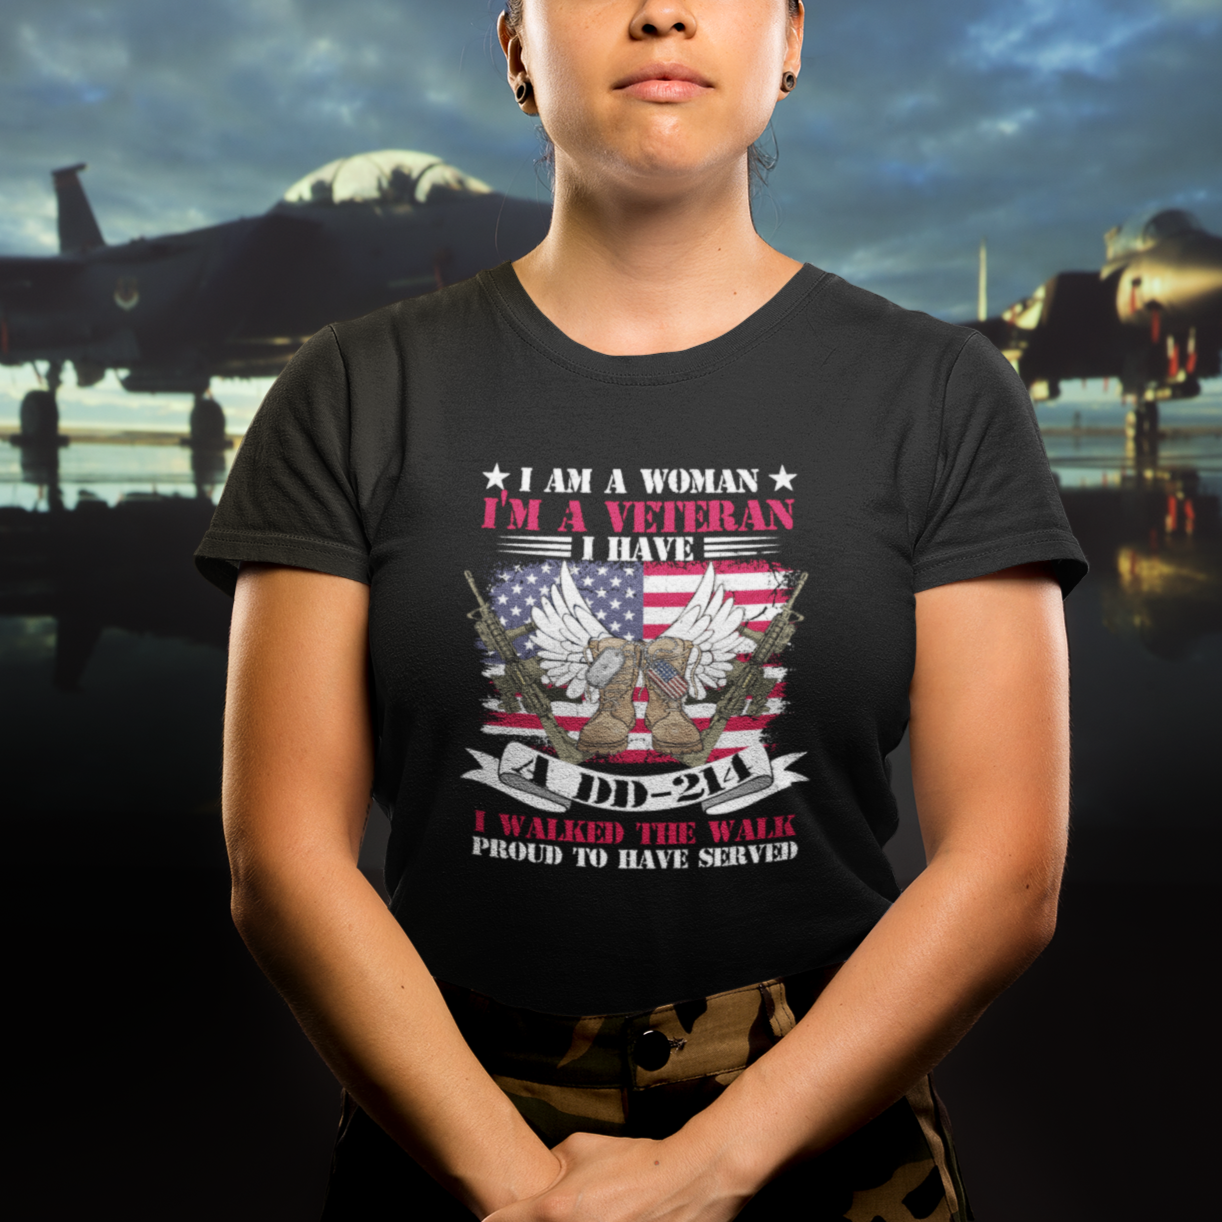 I Am A Woman I'm A Veteran I Have A DD-214 I Walked The Walk T-Shirt for Female Veteran, Women Veterans Shirt, DD214 Shirt, US Military T Shirt TS02